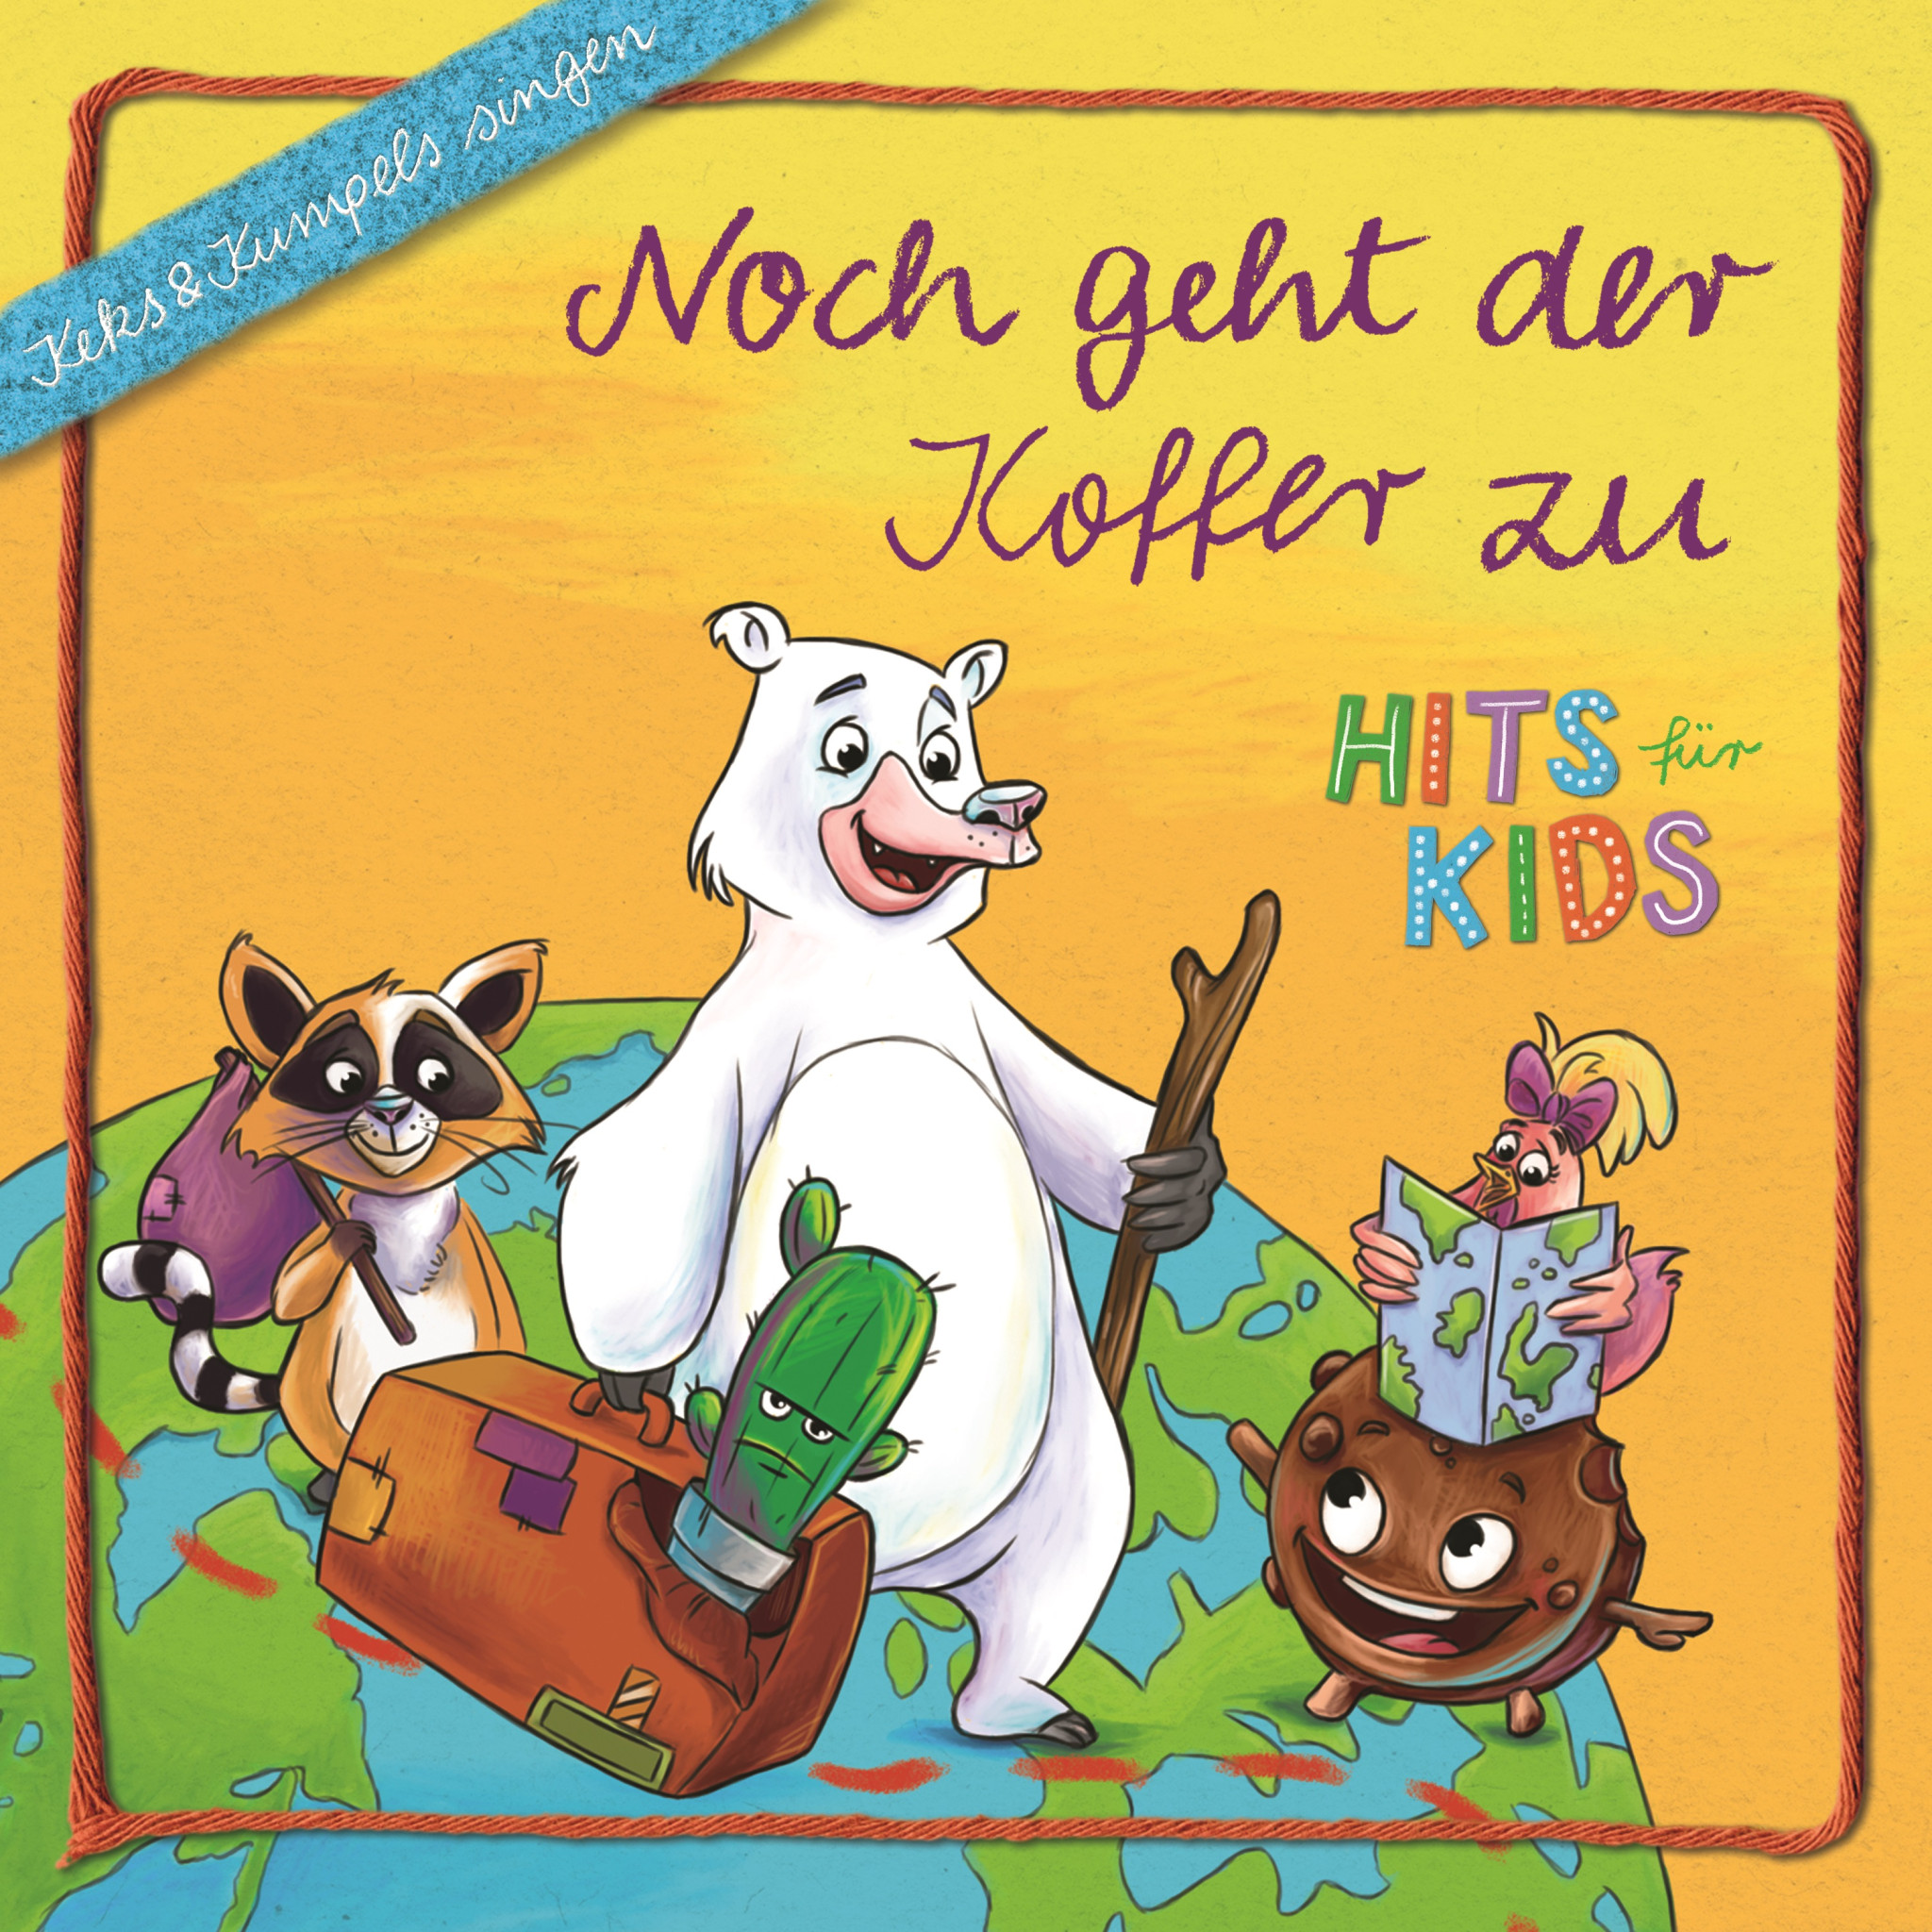 Noch geht der Kopfer zu - Hits für Kids / Keks & Kumpels - COVER